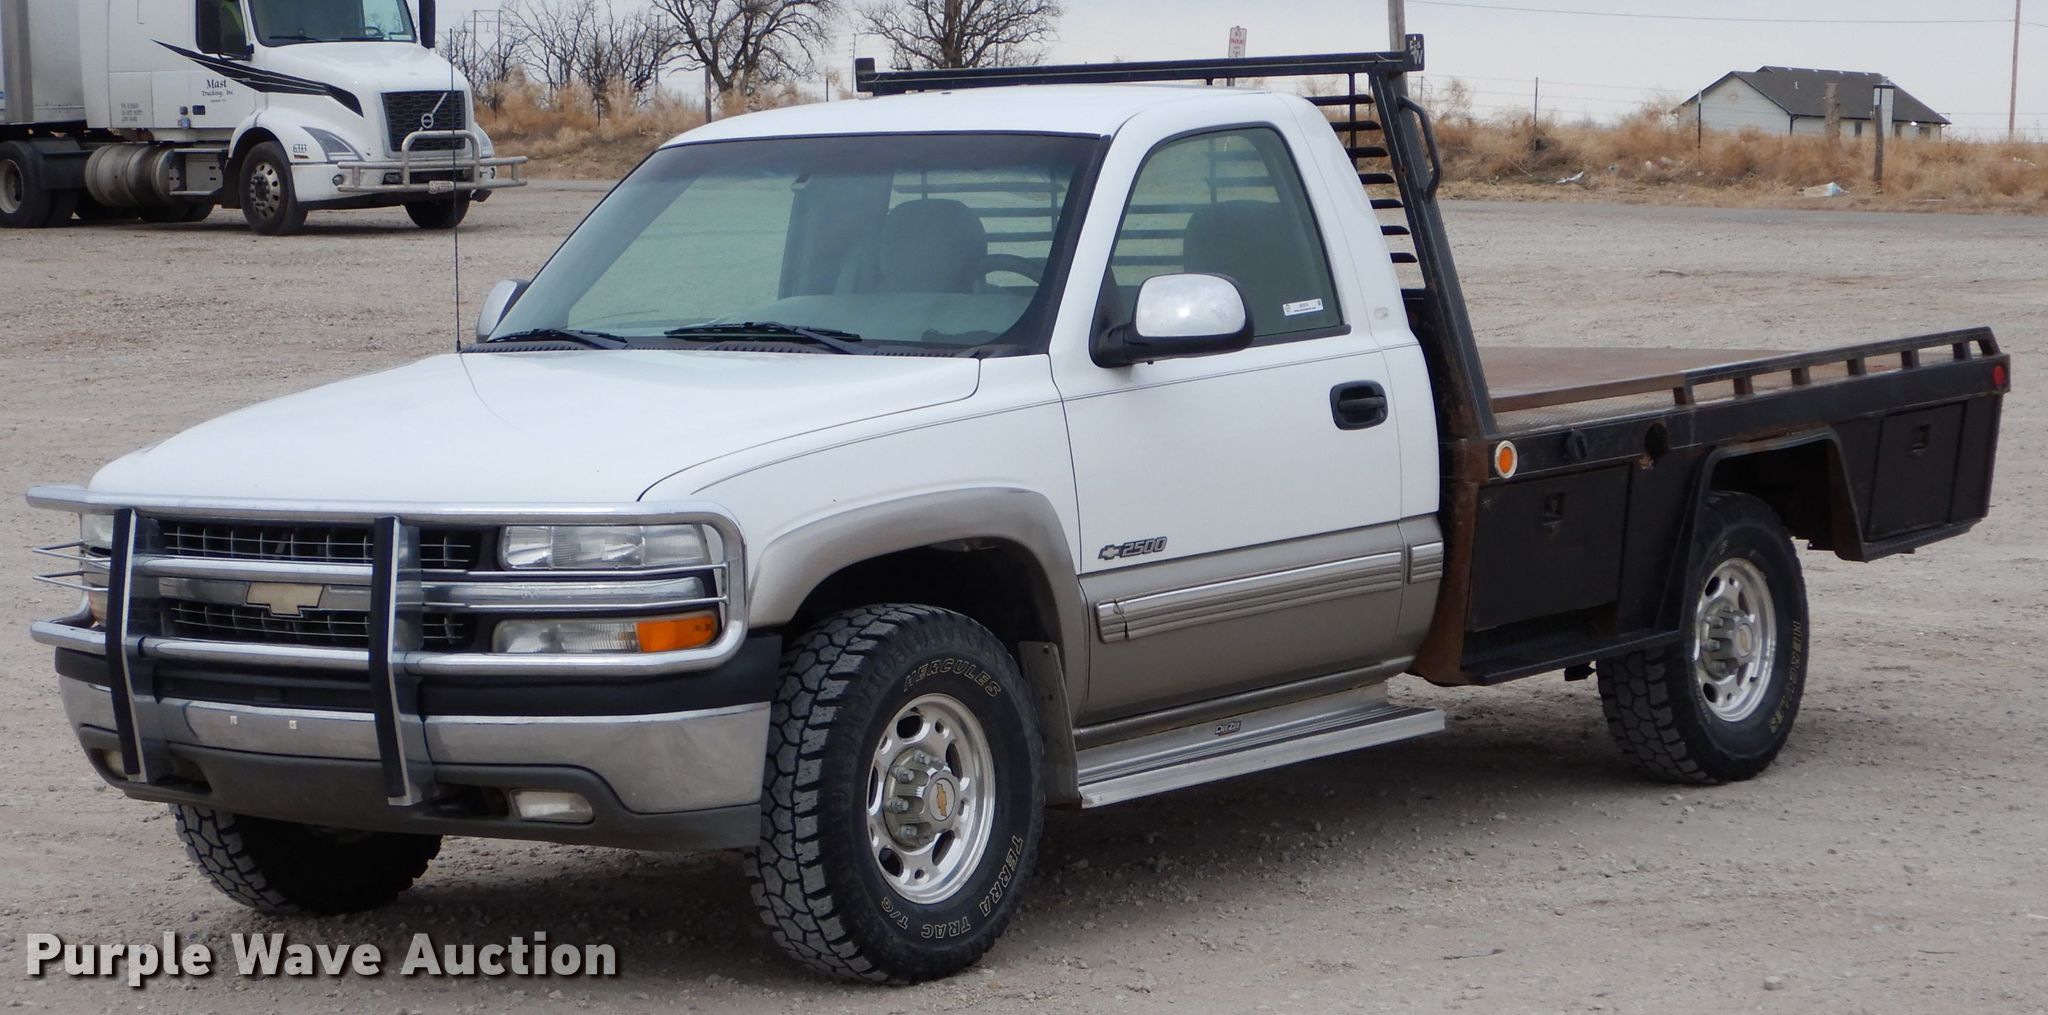 2000 Chevrolet Silverado 2500 flatbed pickup truck in Dodge City, KS | Item  IE9576 sold | Purple Wave